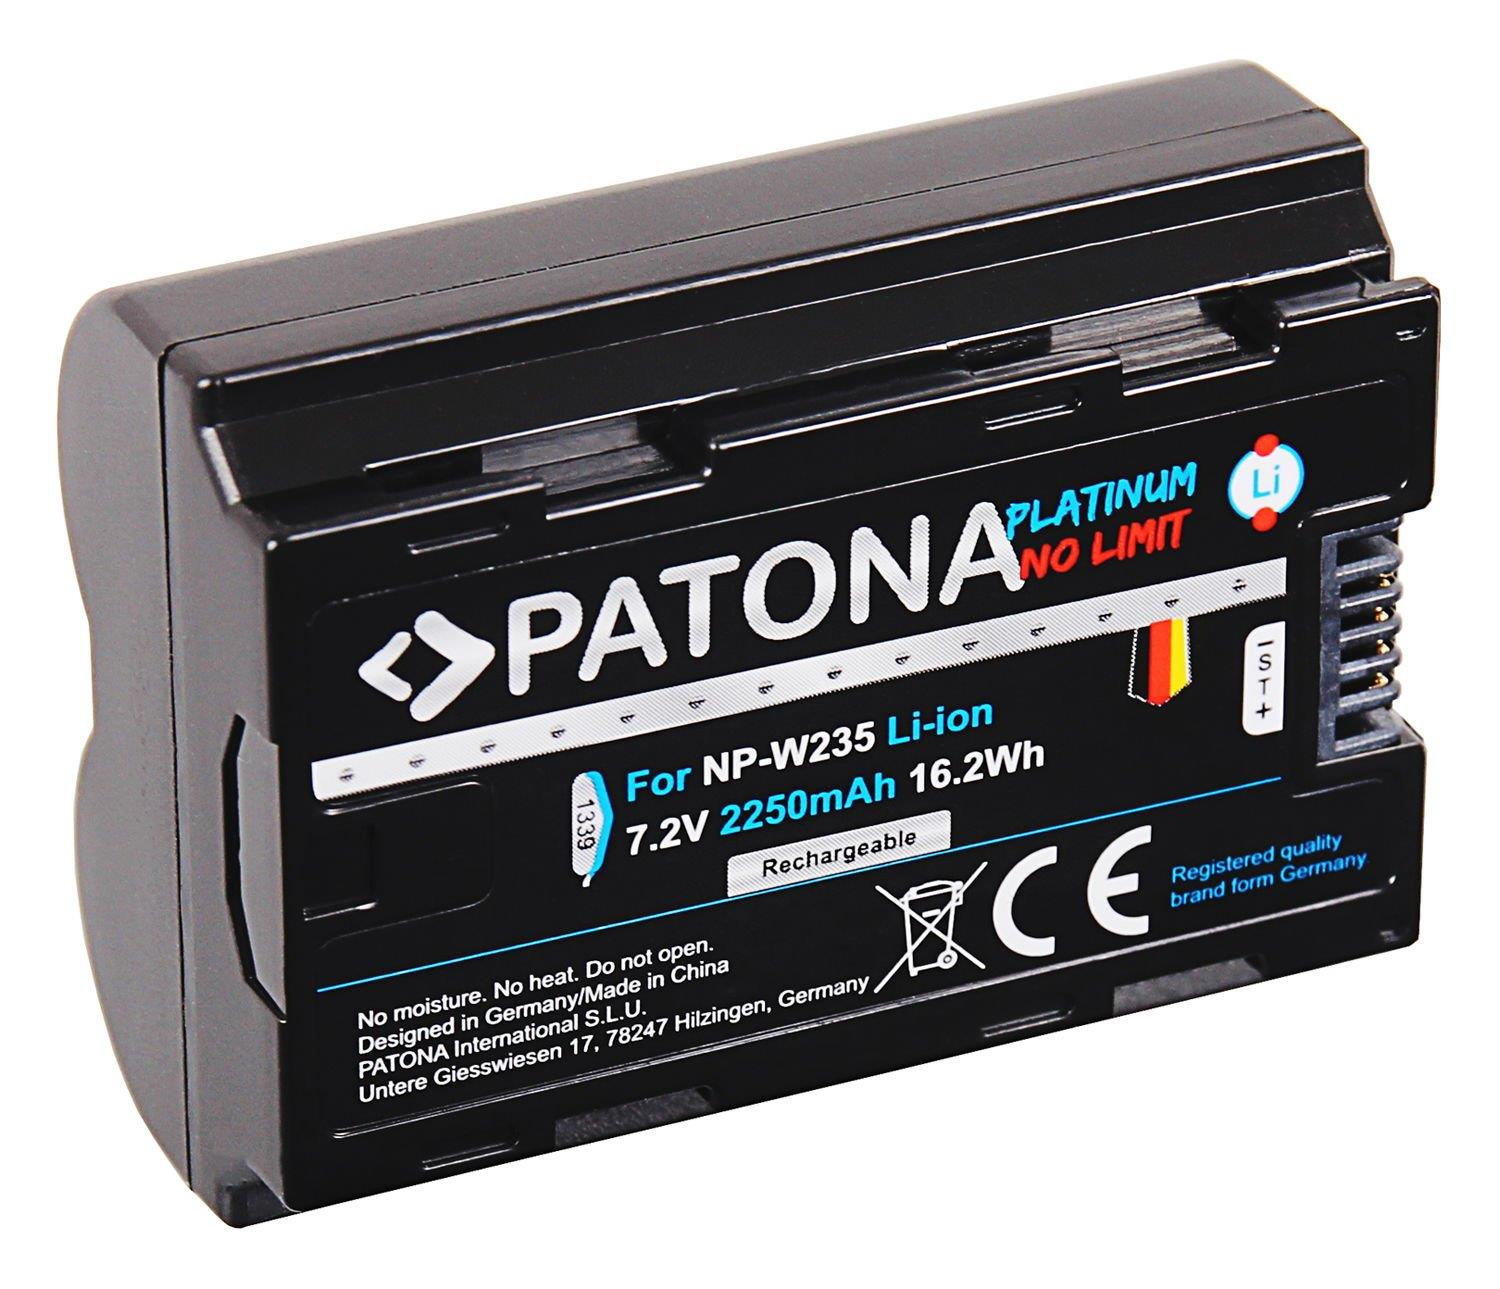 Patona Platinum Batarya Fuji NP-W235 İçin